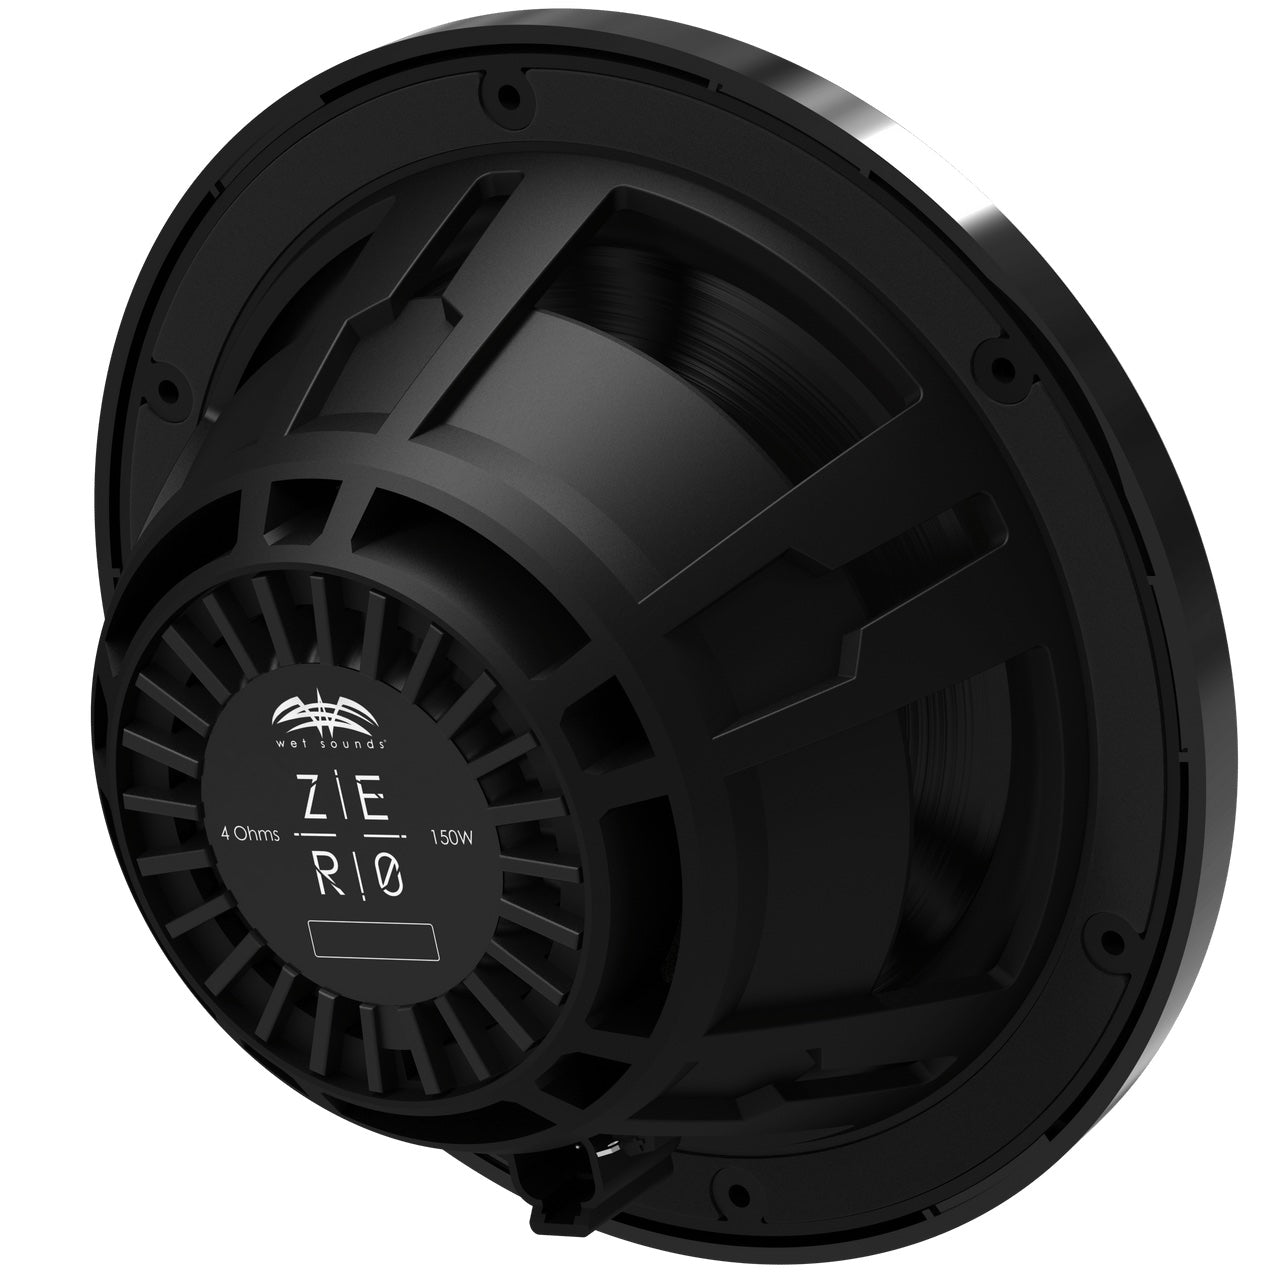 Wet Sounds ZERO 8 XZ-B Wet Sounds High-Output 8" Marine Coaxial Speakers